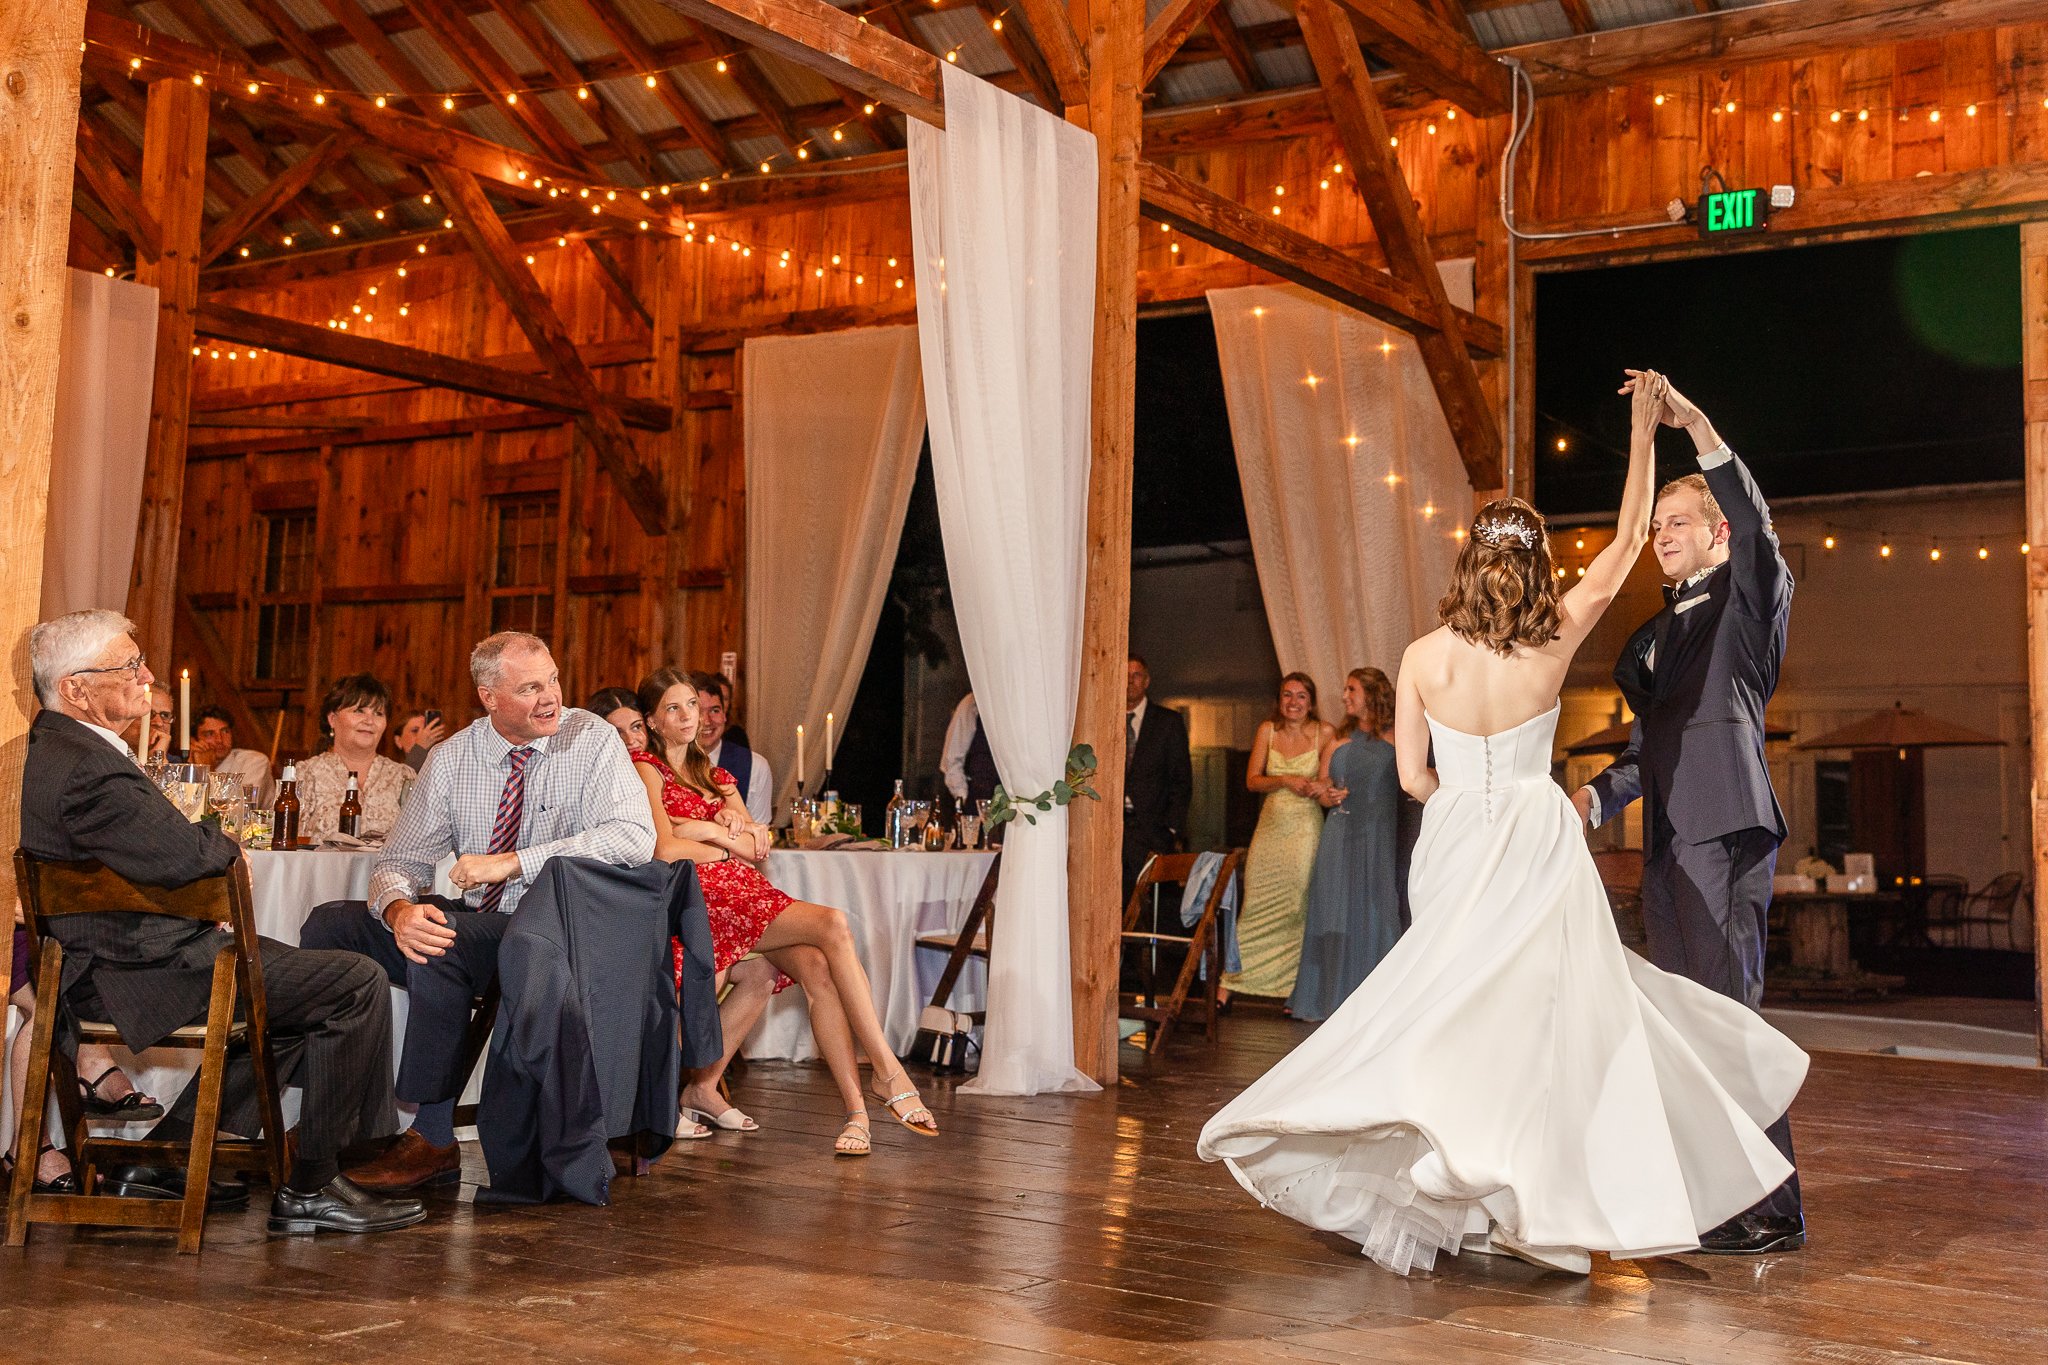 Wisteria-barn-wedding-photos-124.jpg